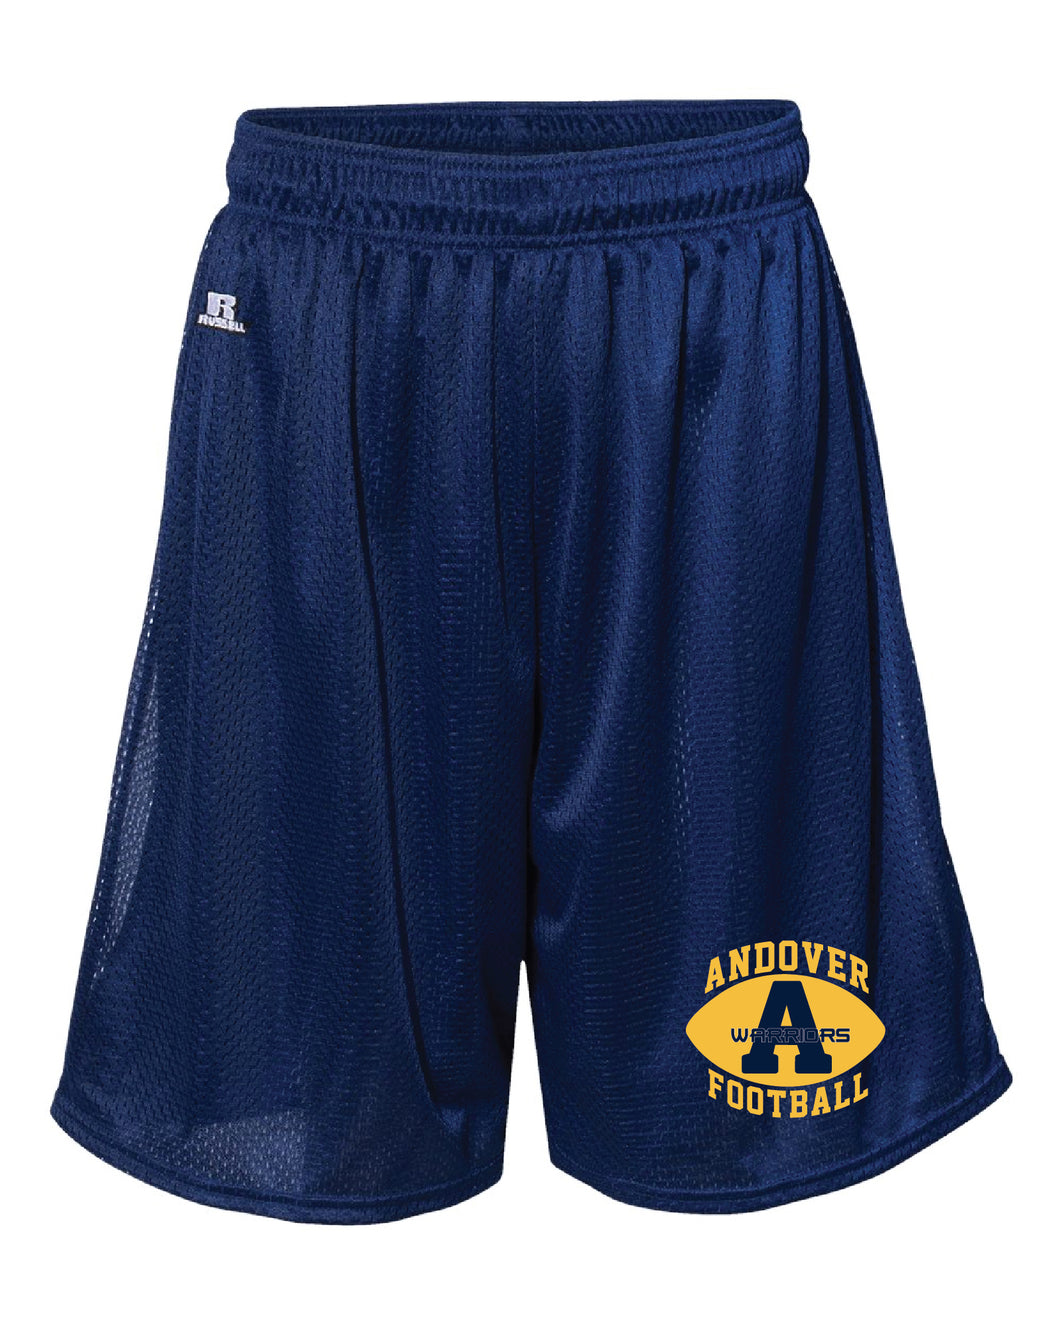 Andover Warriors Football Russell Athletic  Tech Shorts - Navy - 5KounT2018